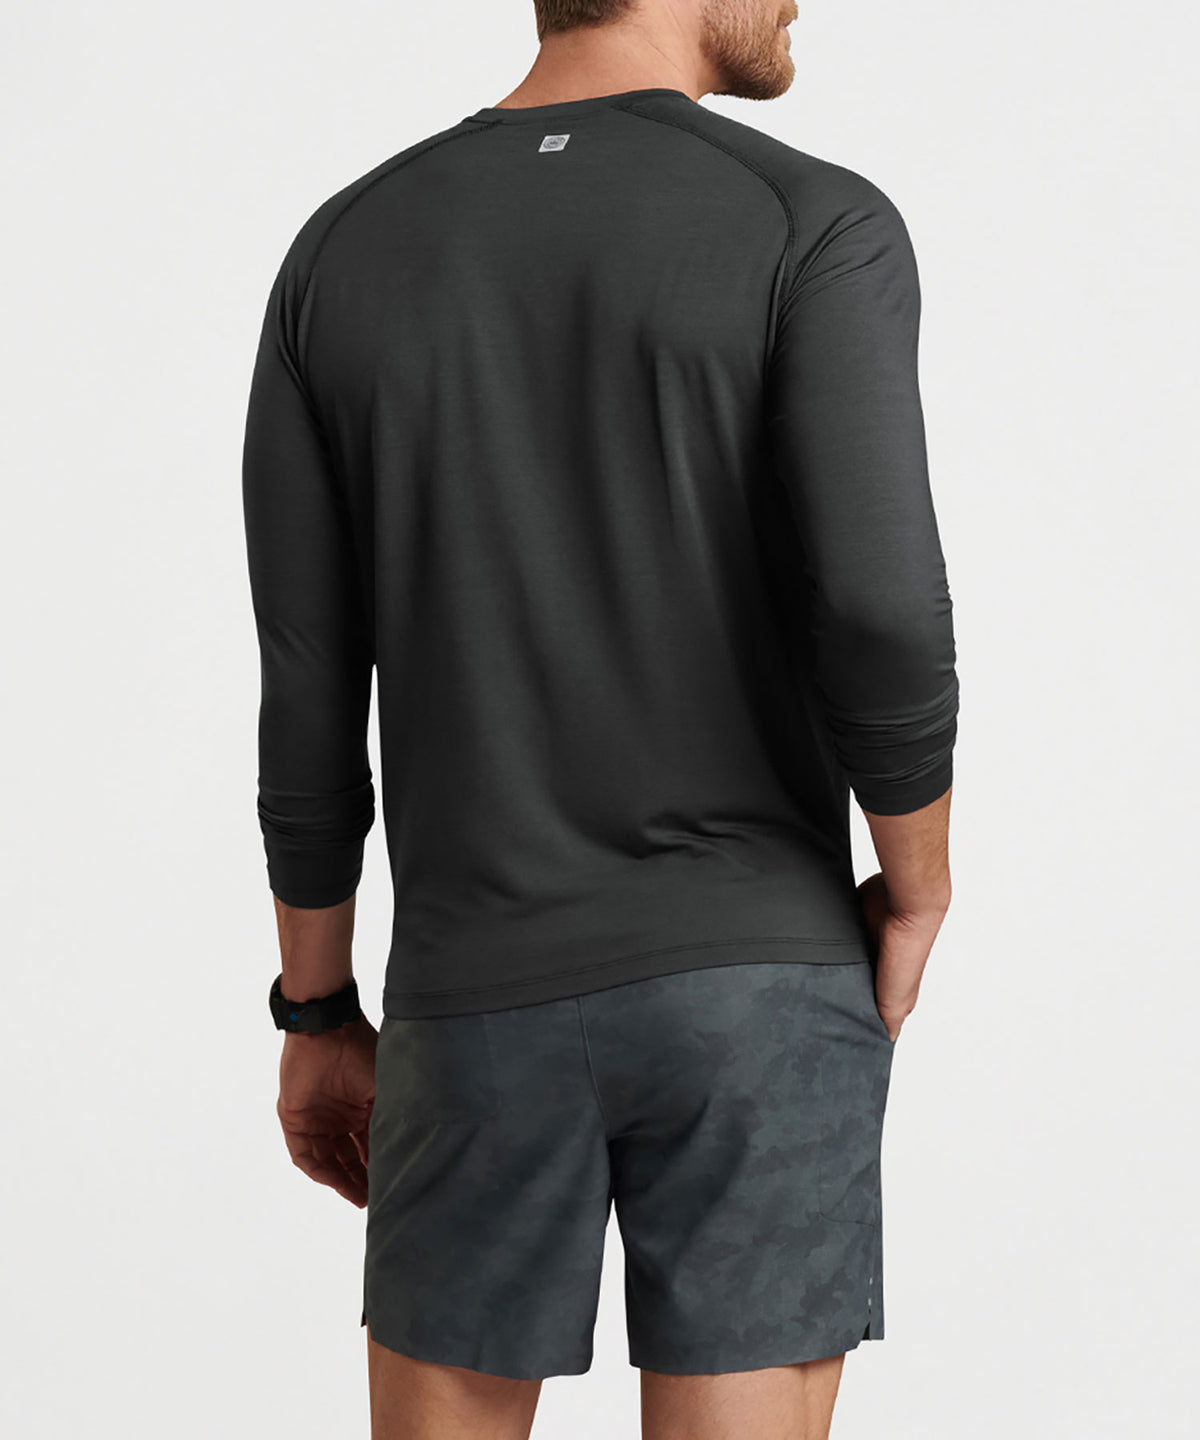 Peter Millar Long Sleeve Aurora Performance T-Shirt, Big & Tall